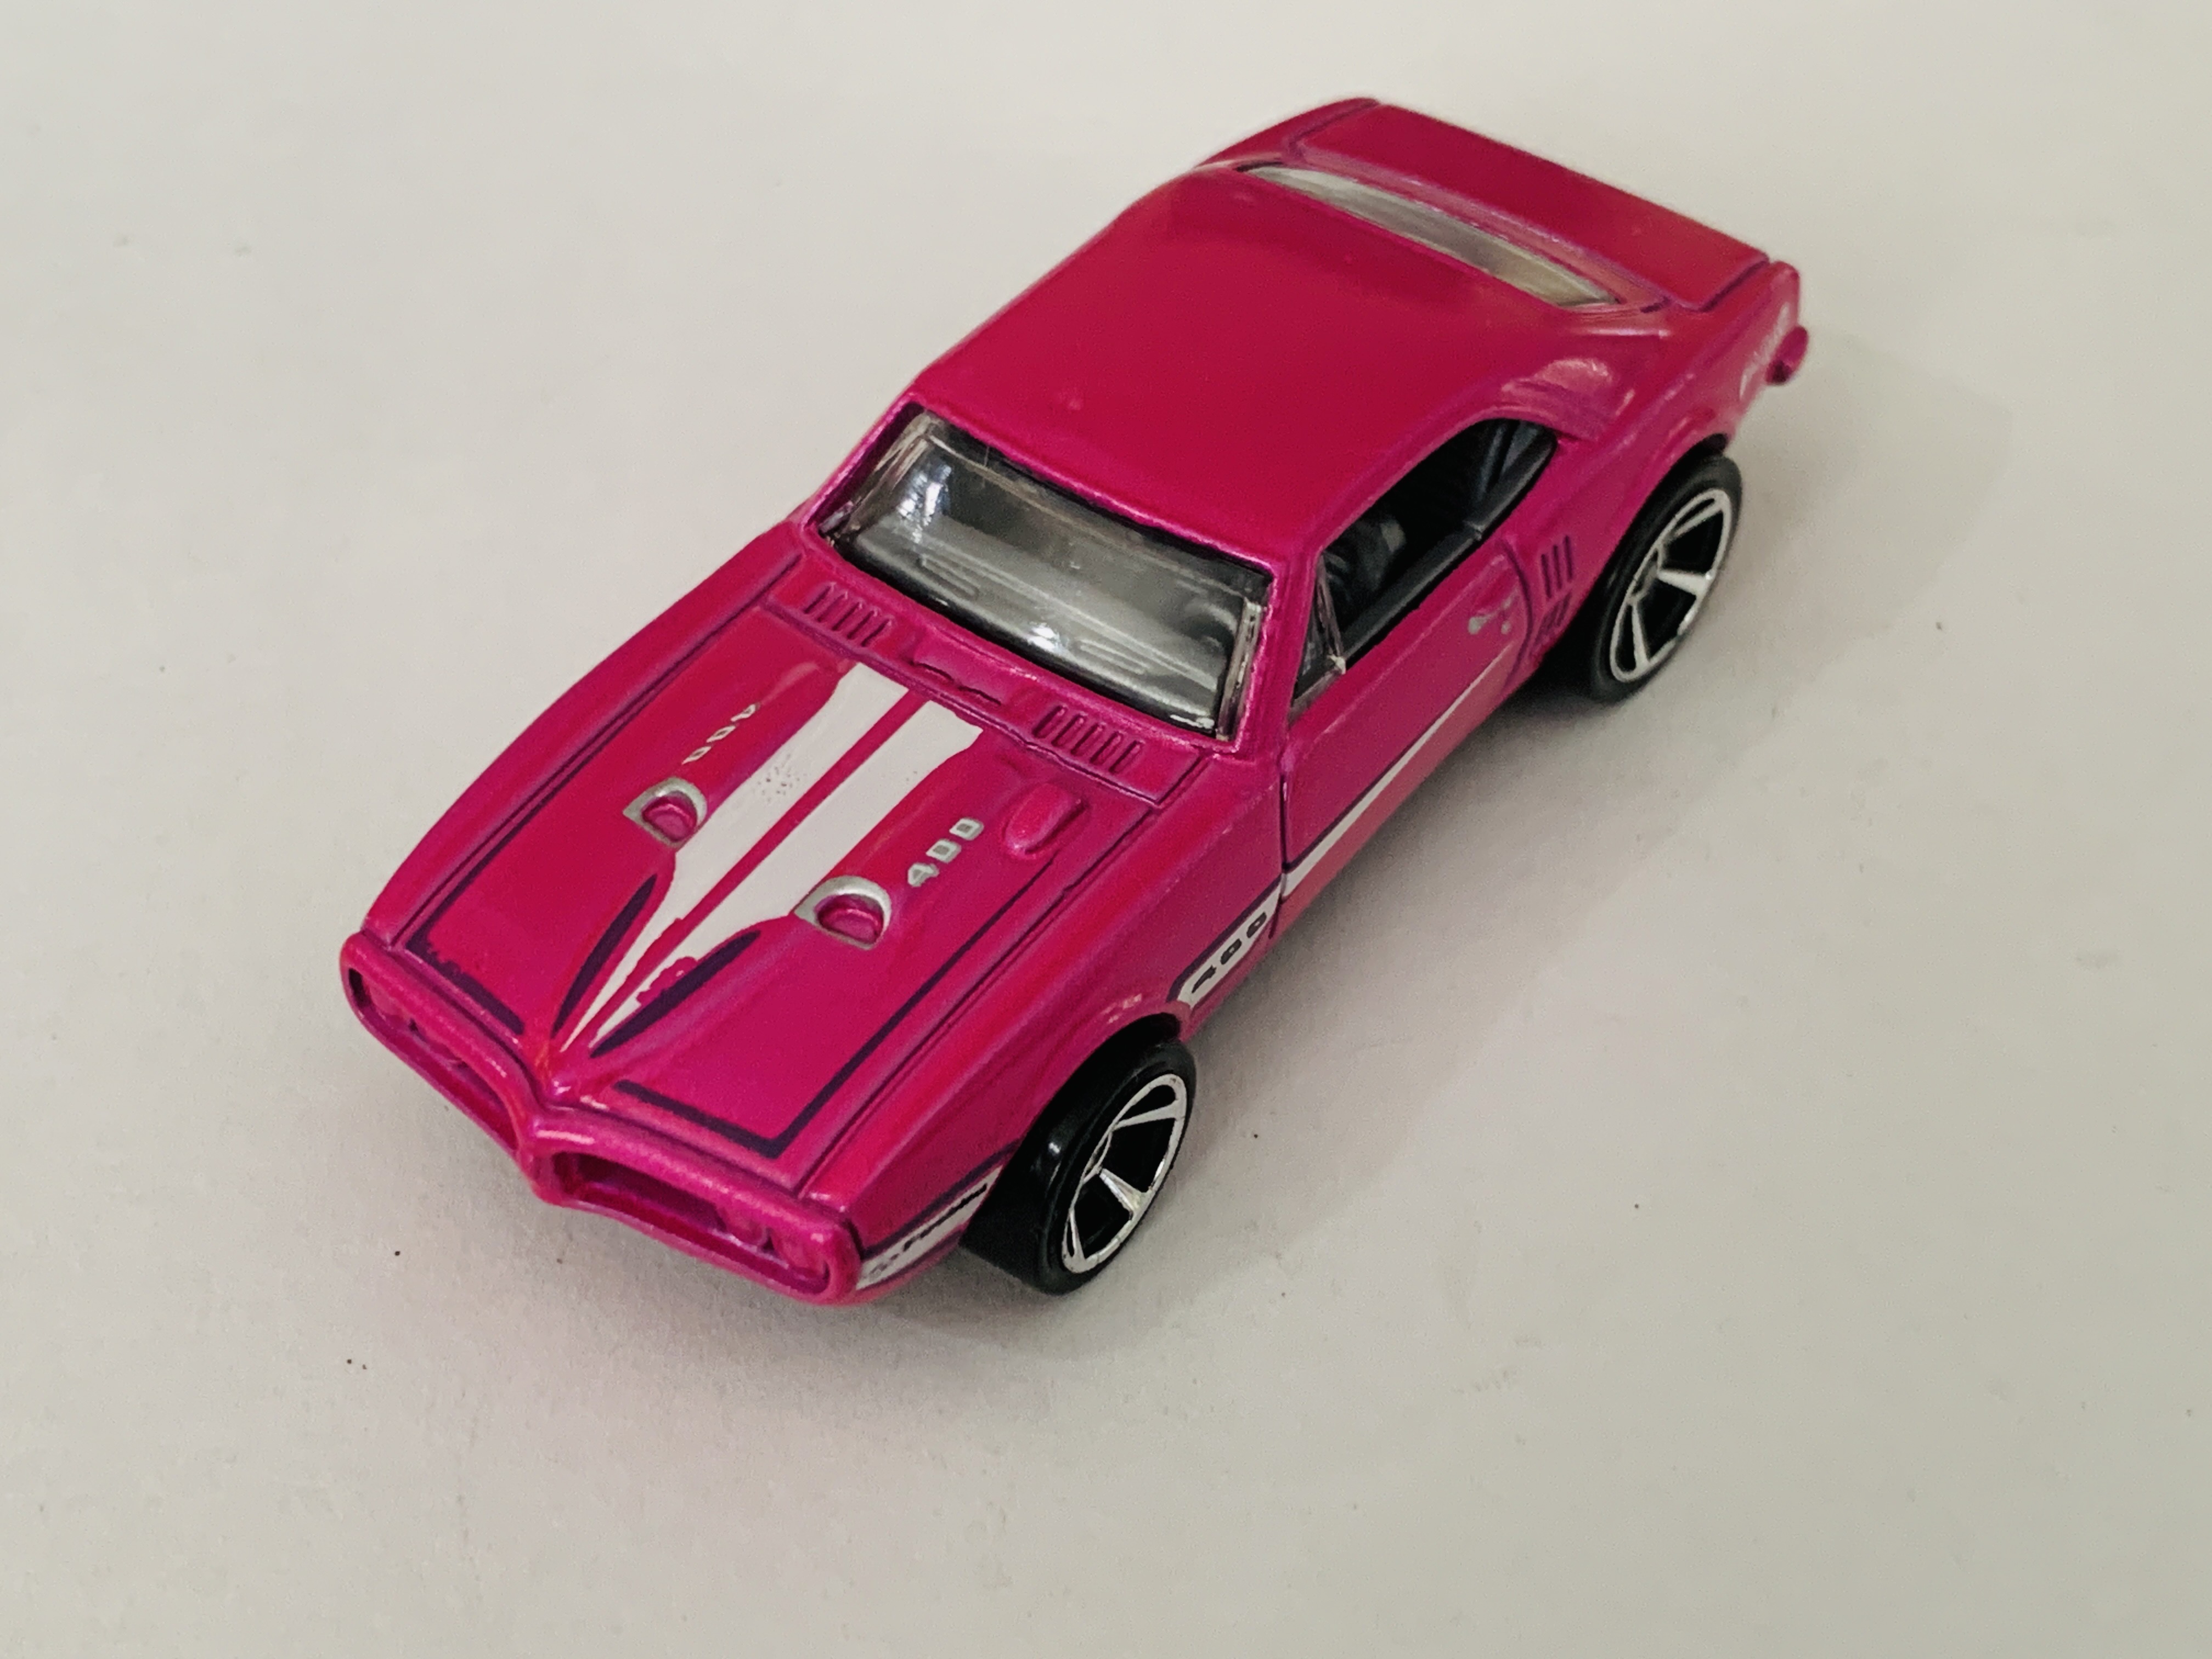 Hot Wheels '67 Pontiac Firebird 400 - Walmart Exclusive